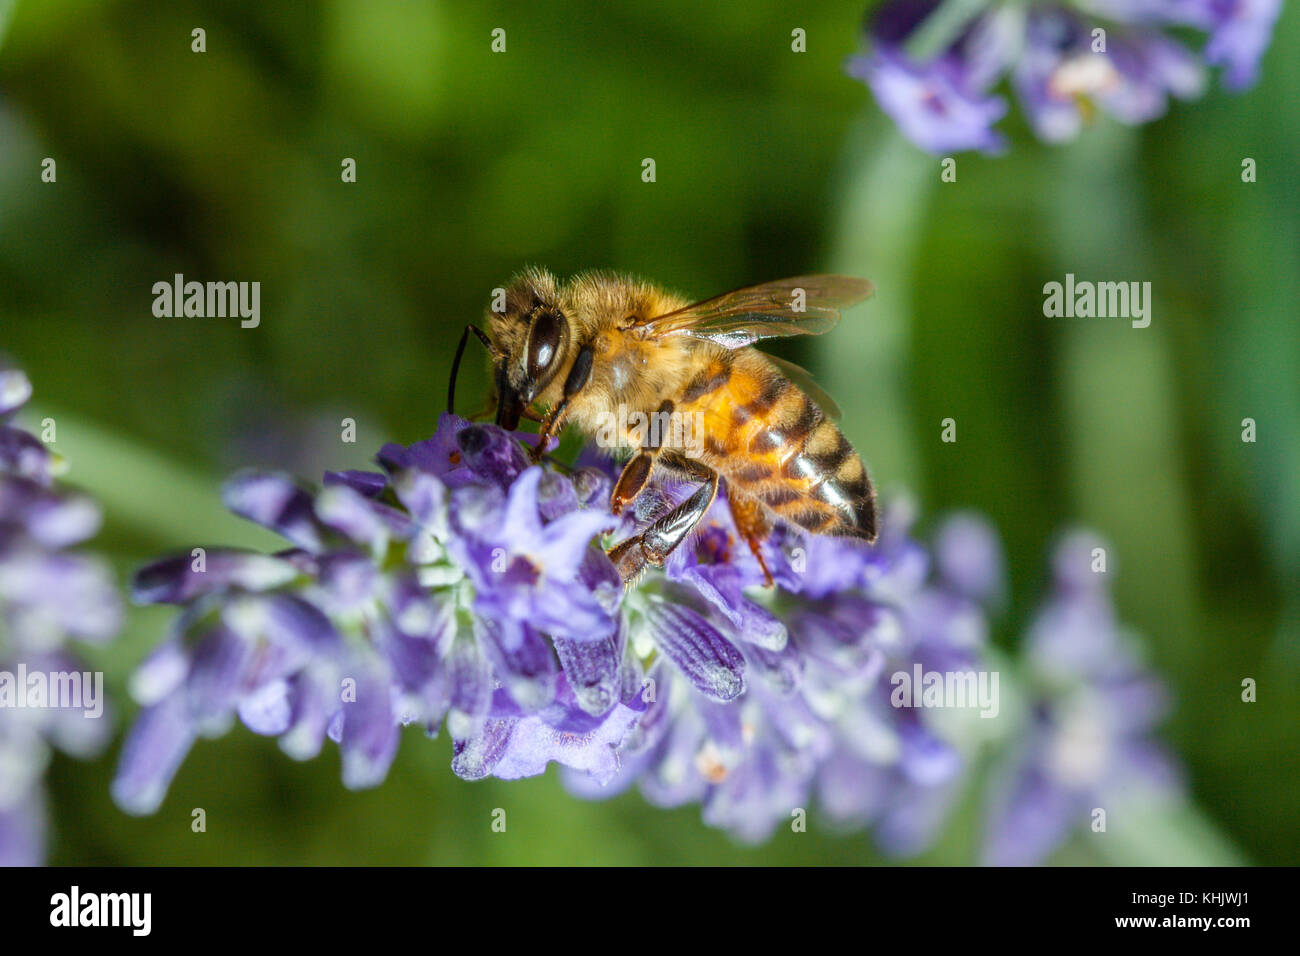 Lana europea carda de abeja, polen anthidium manicatum consume, Munich, Baviera, Alemania Foto de stock